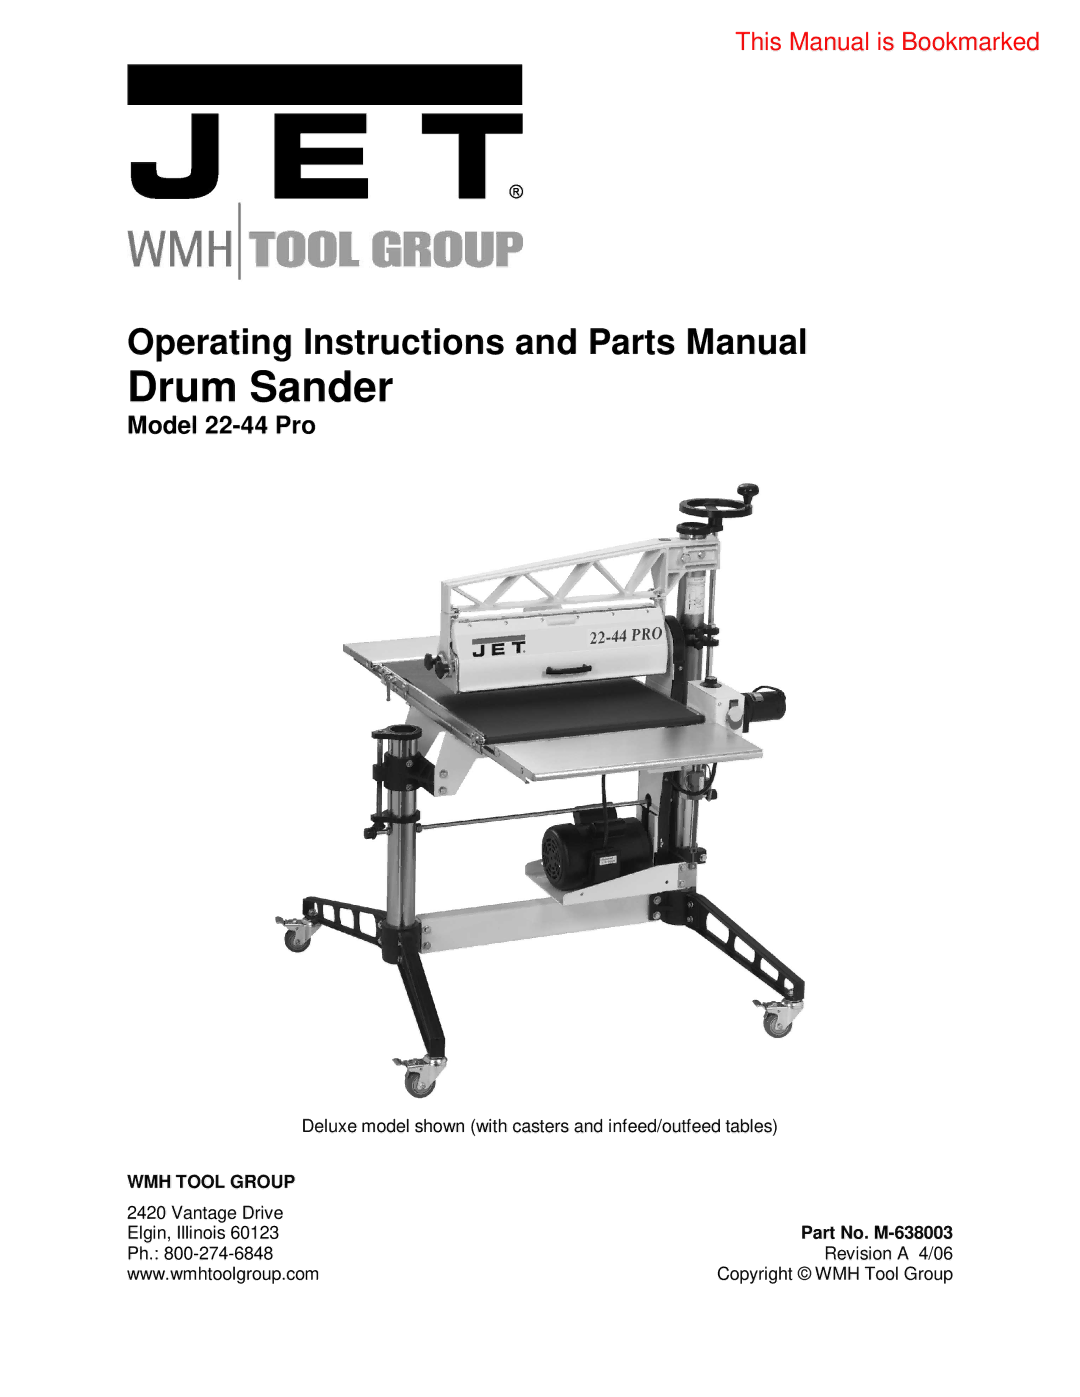 Jet Tools 22-44 Pro operating instructions Drum Sander 